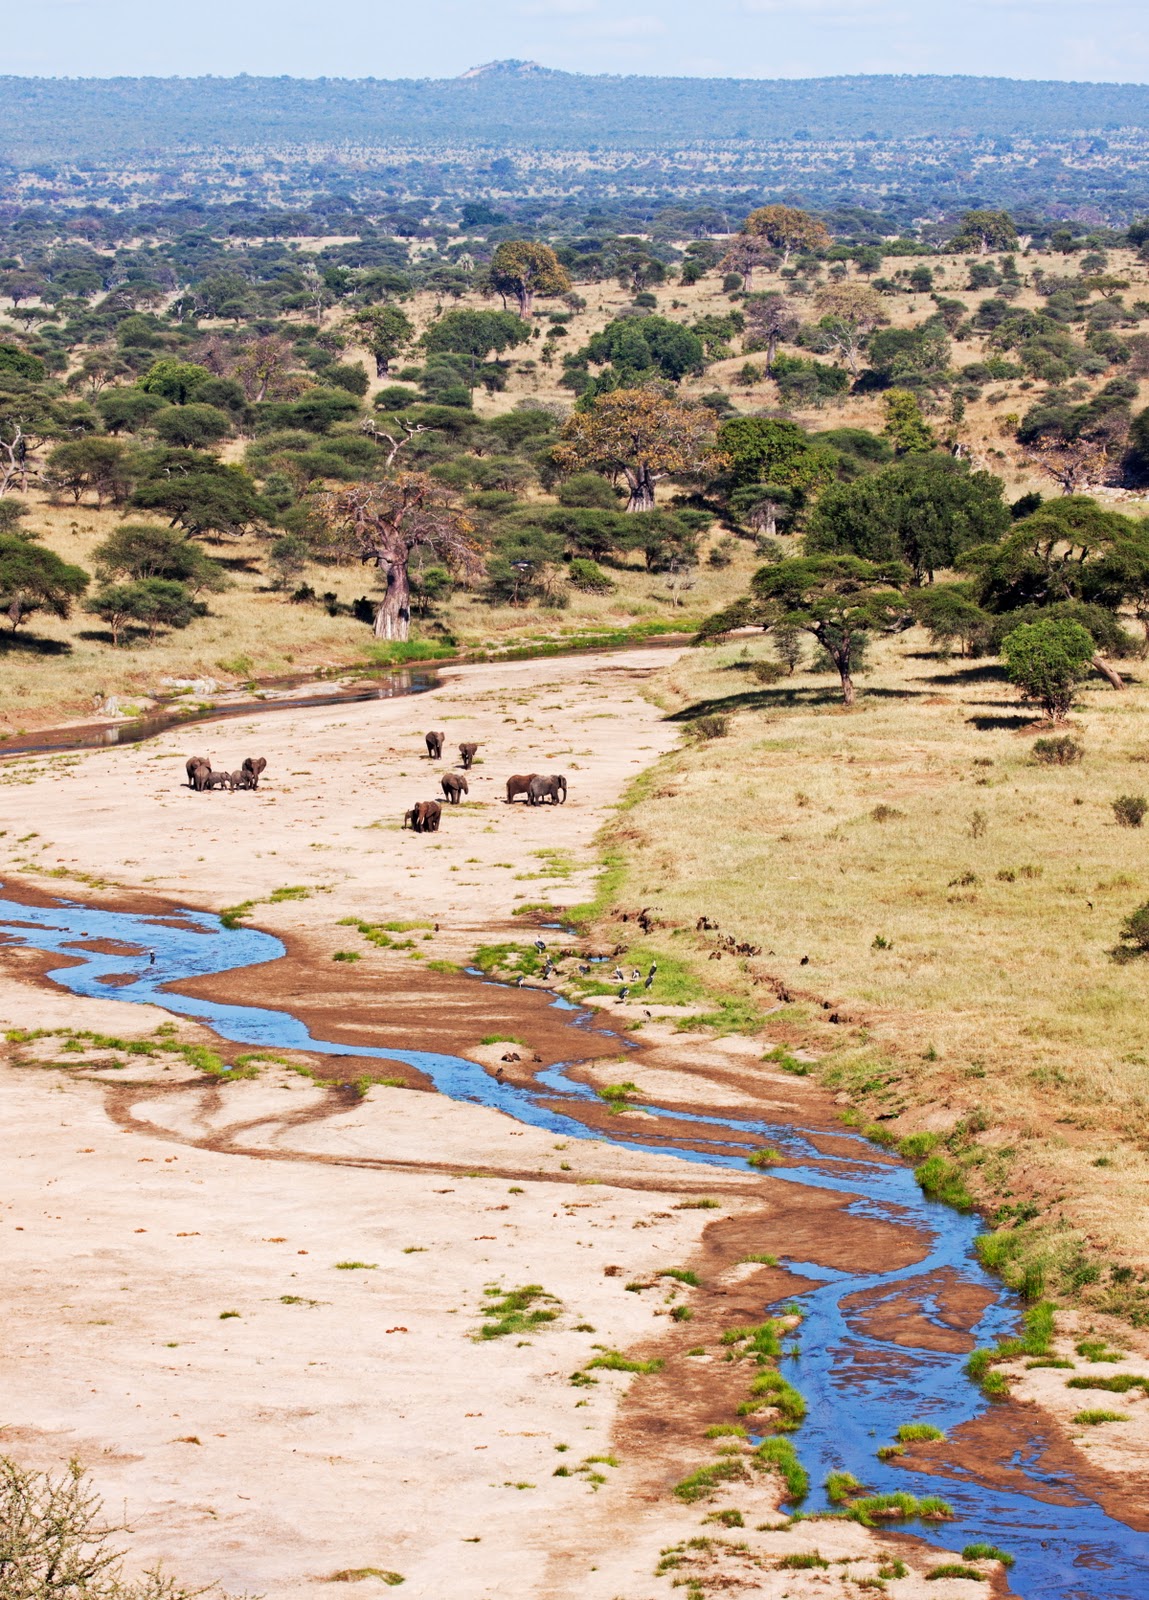 Quintessential African scene from Tarangire National Park, Tanzania